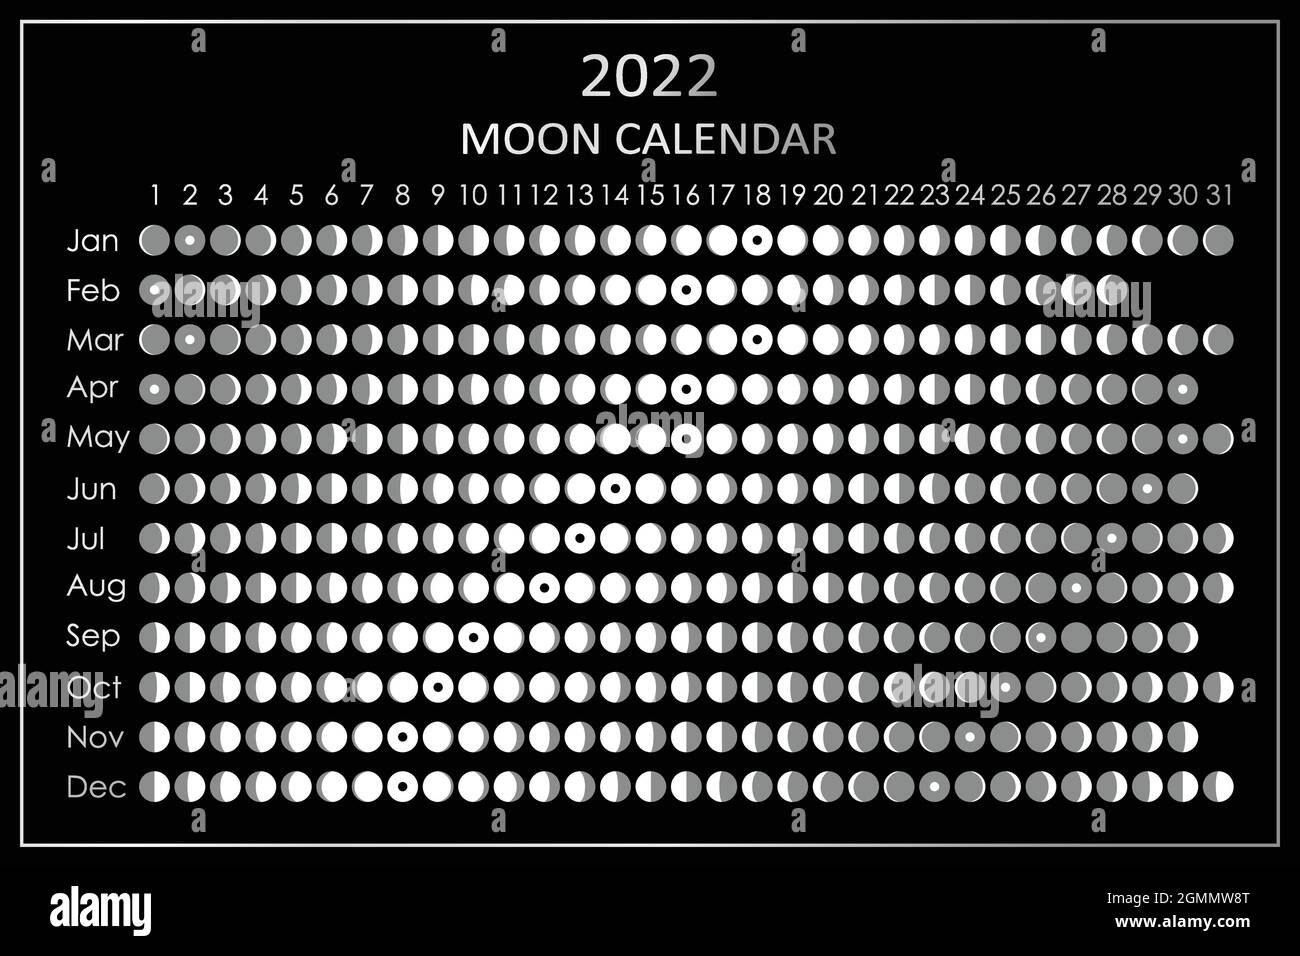 Calendar 2022 Black And White Stock Photos Images Alamy